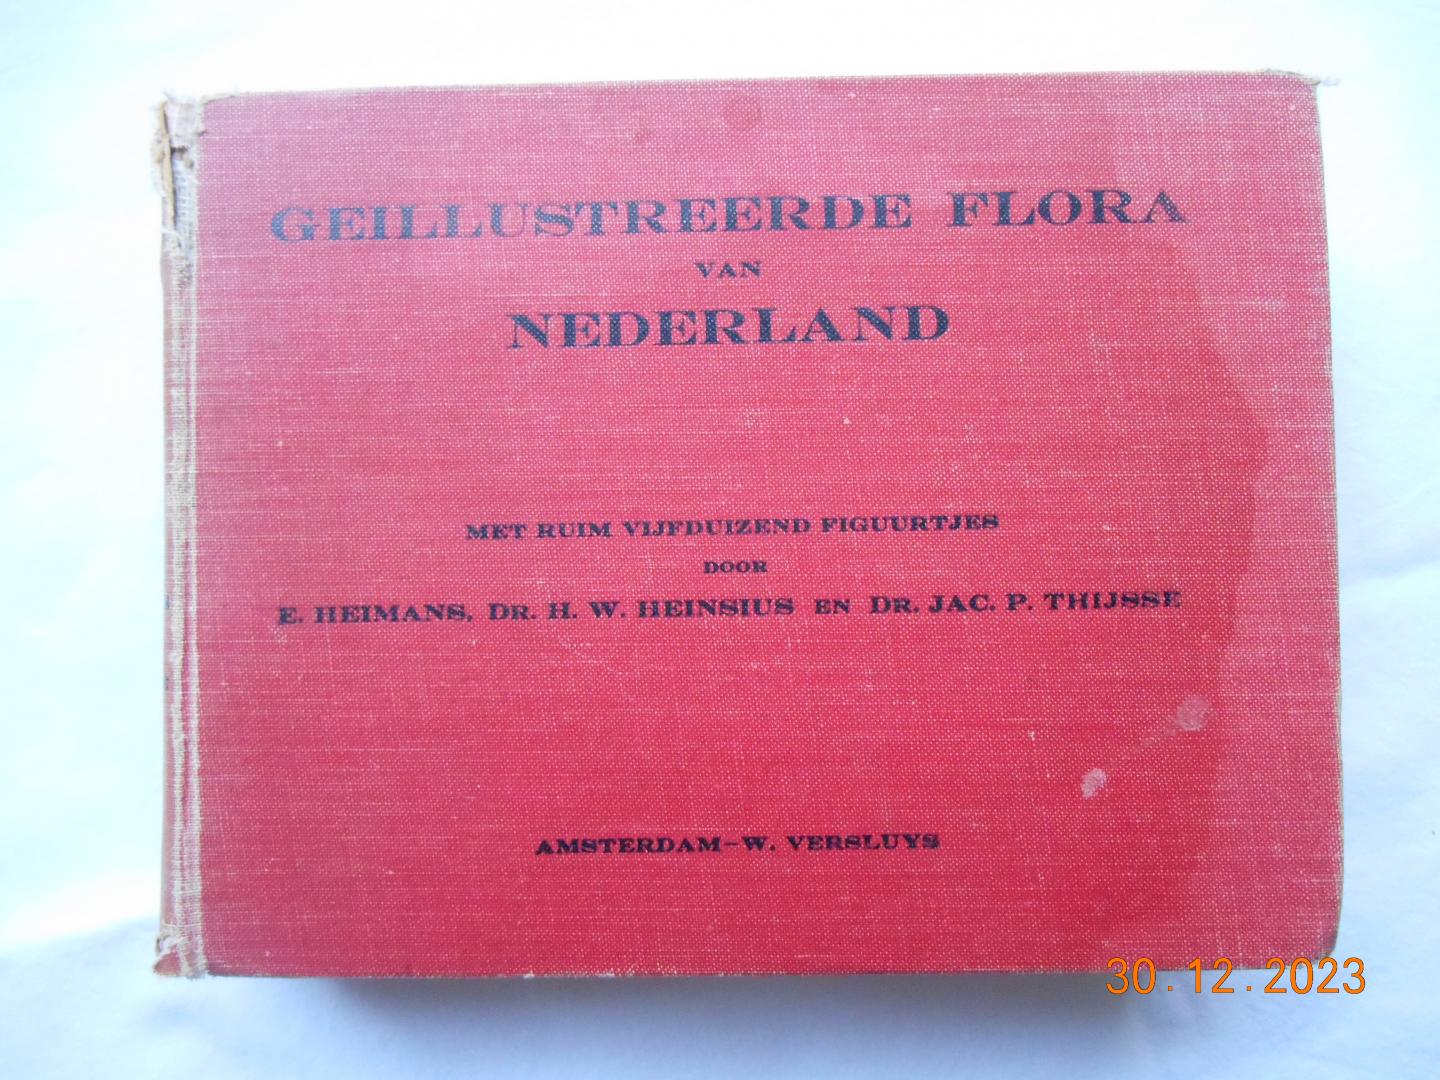 Heimans, E. , H.W. Heinsius en J.P. Thijsse - Geïllustreerde flora van Nederland